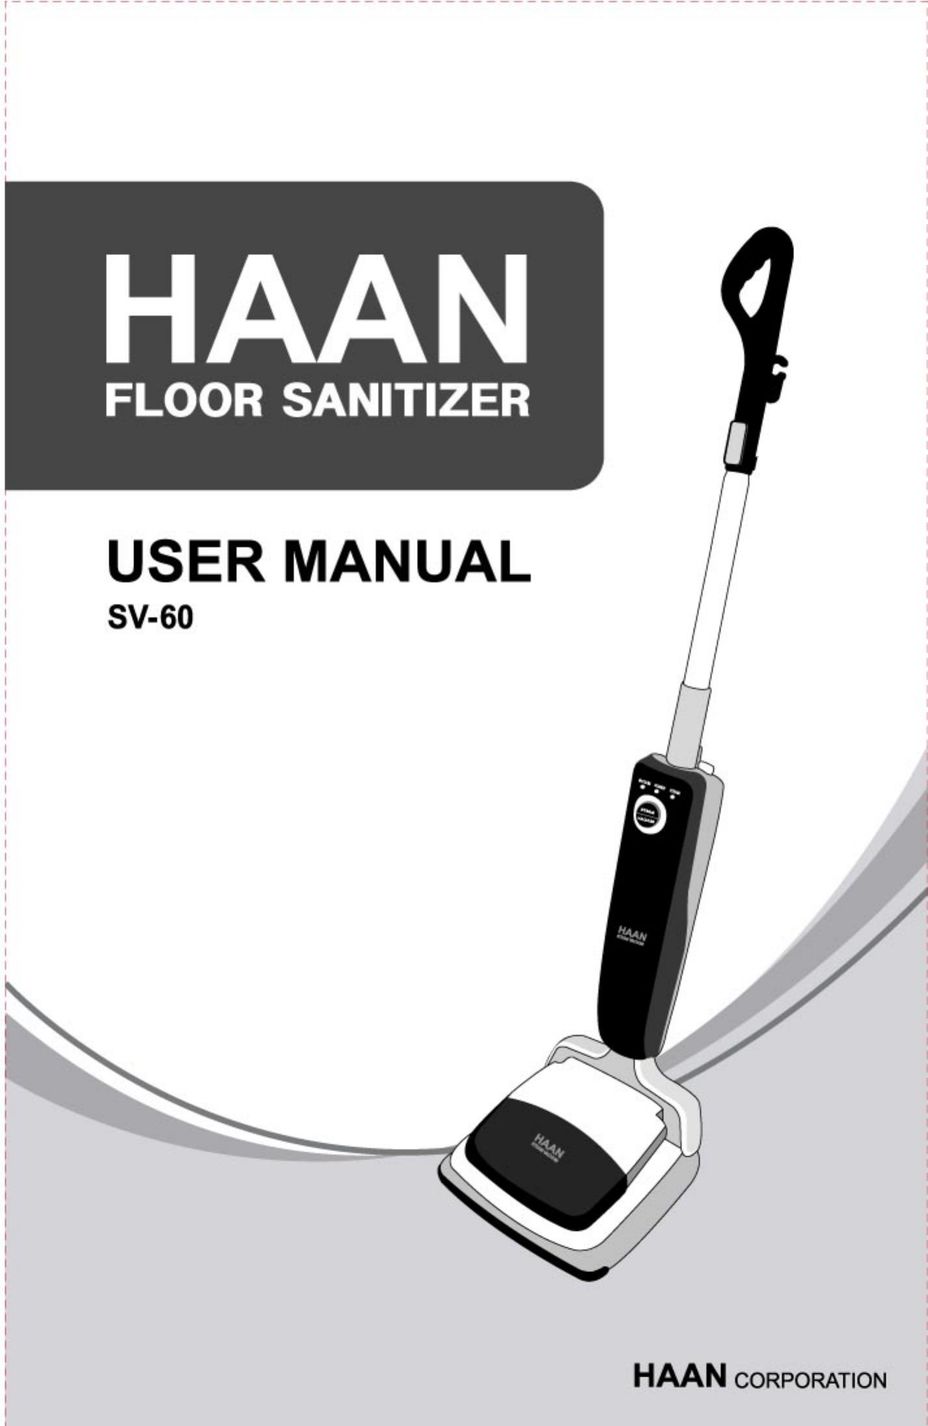 Haan SV-60 Carpet Cleaner User Manual